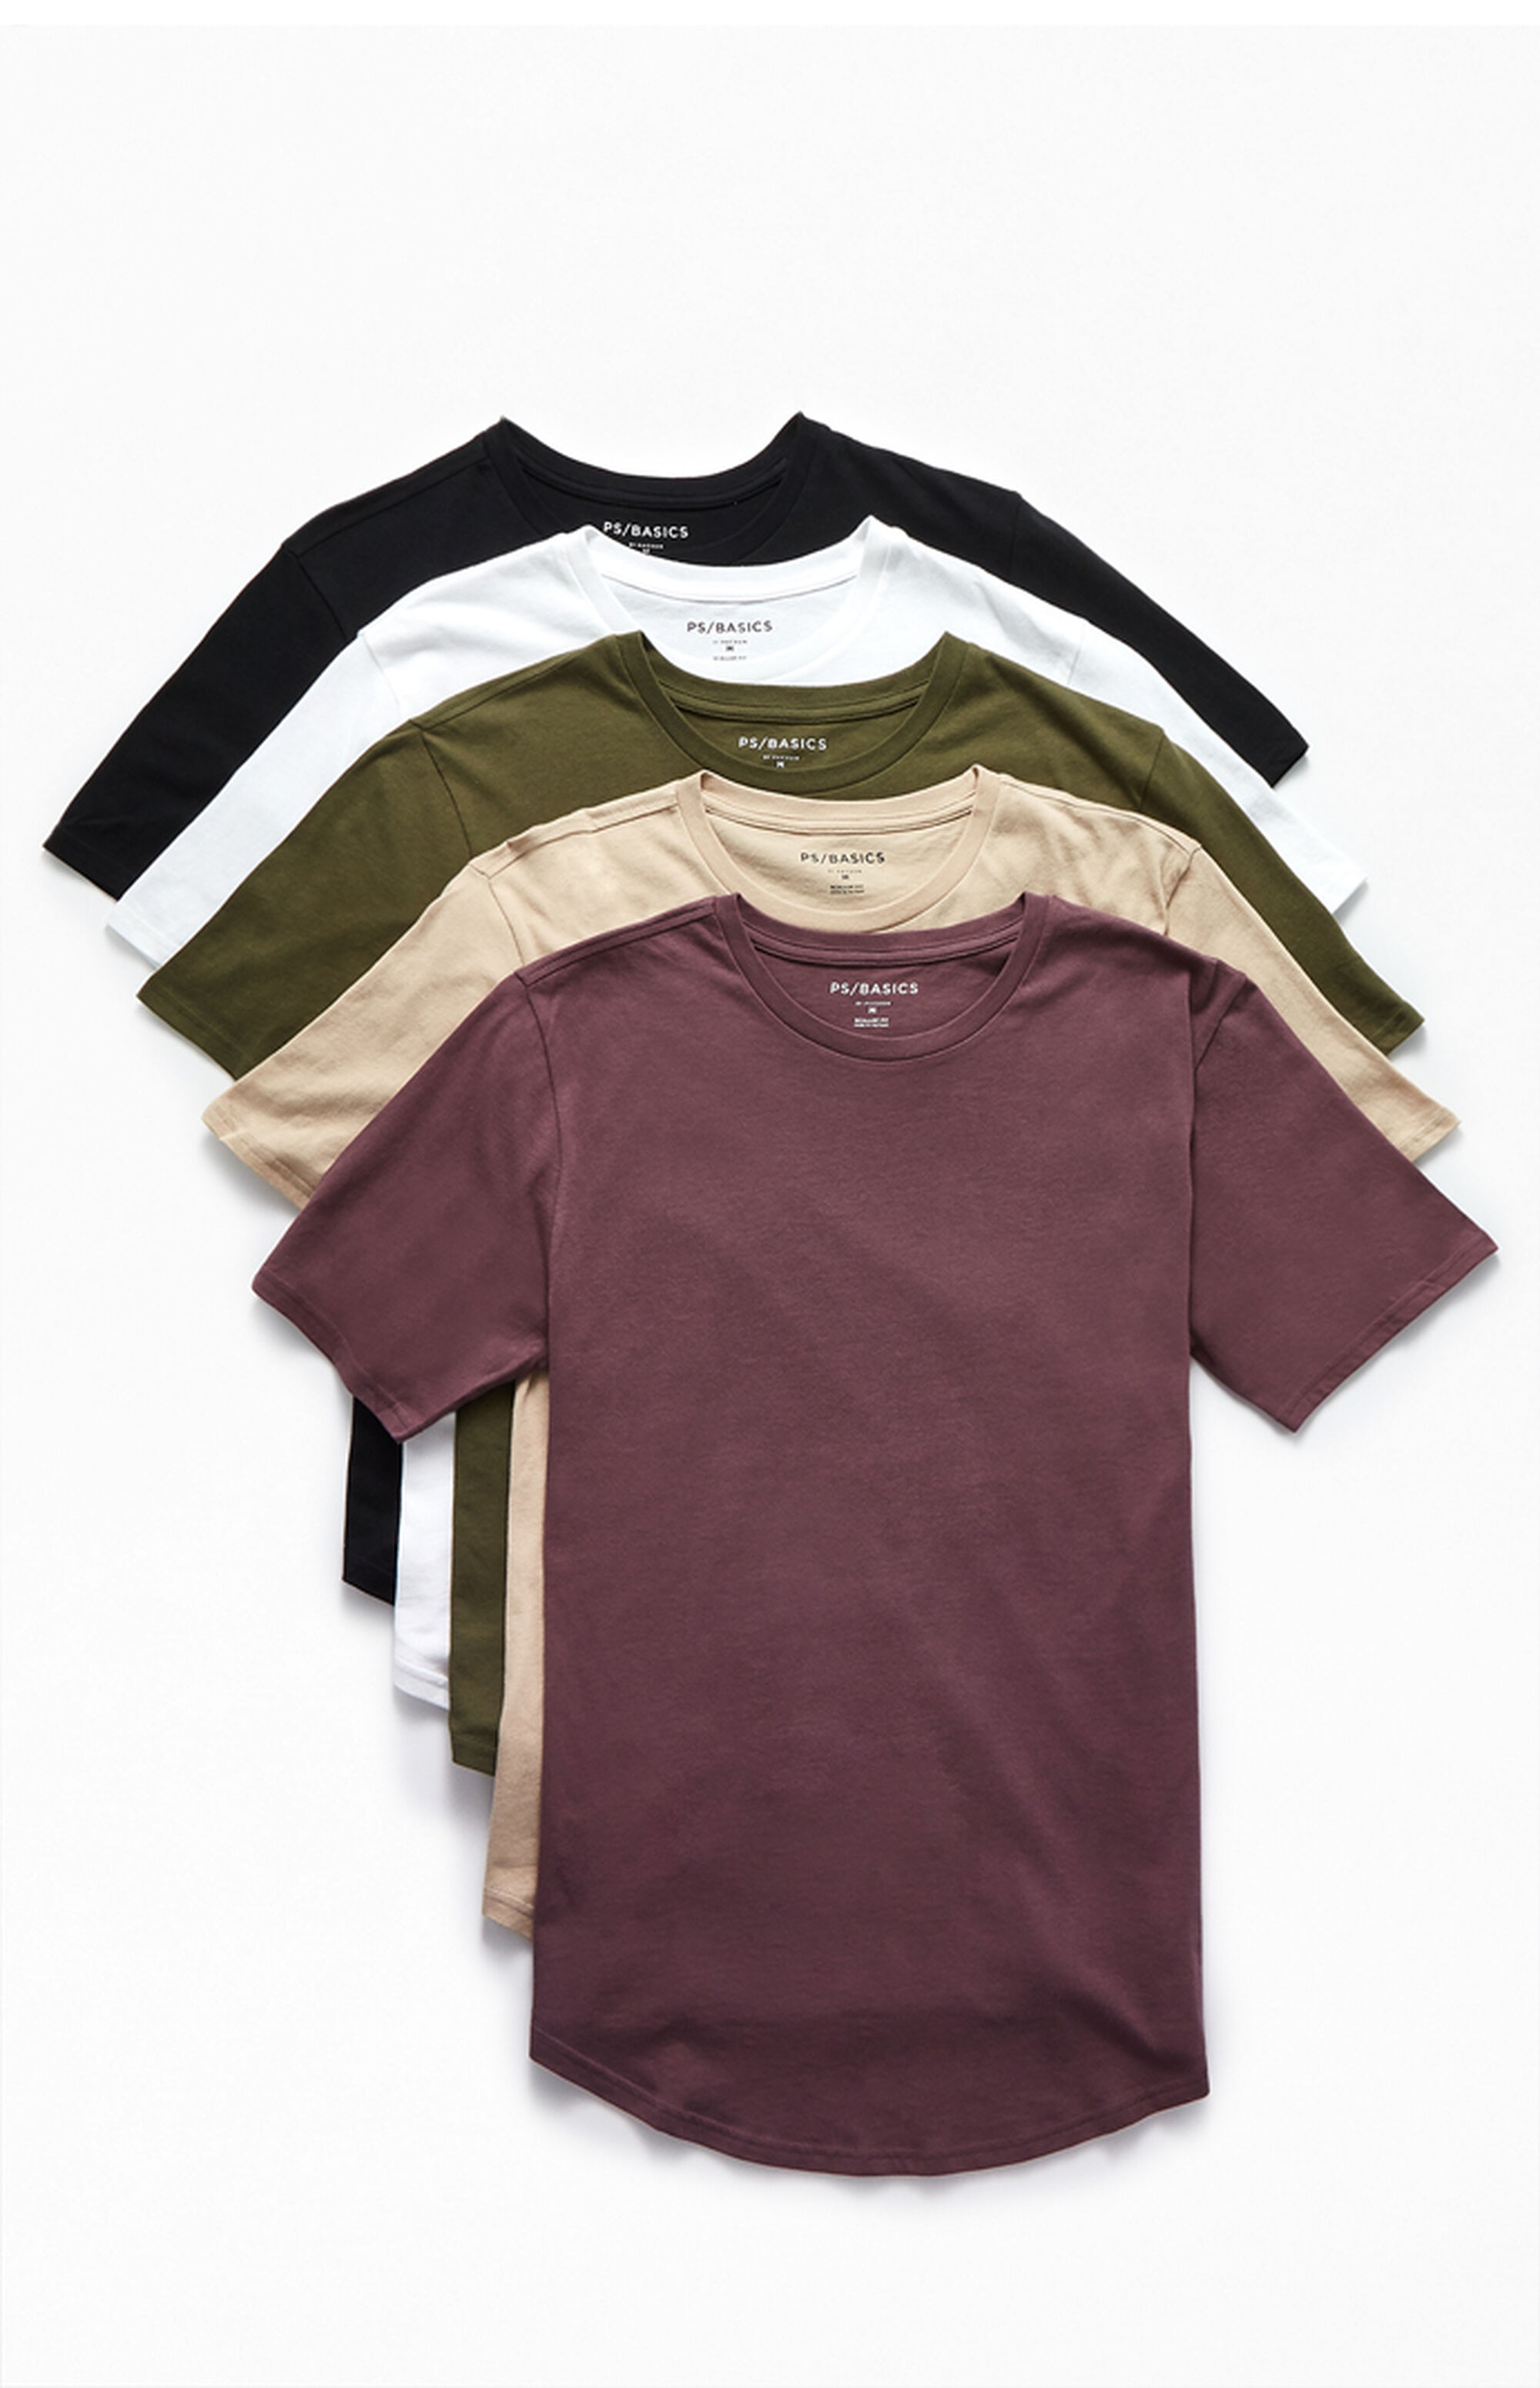 PS Basics Five-Pack Warden Scallop T-Shirts | PacSun